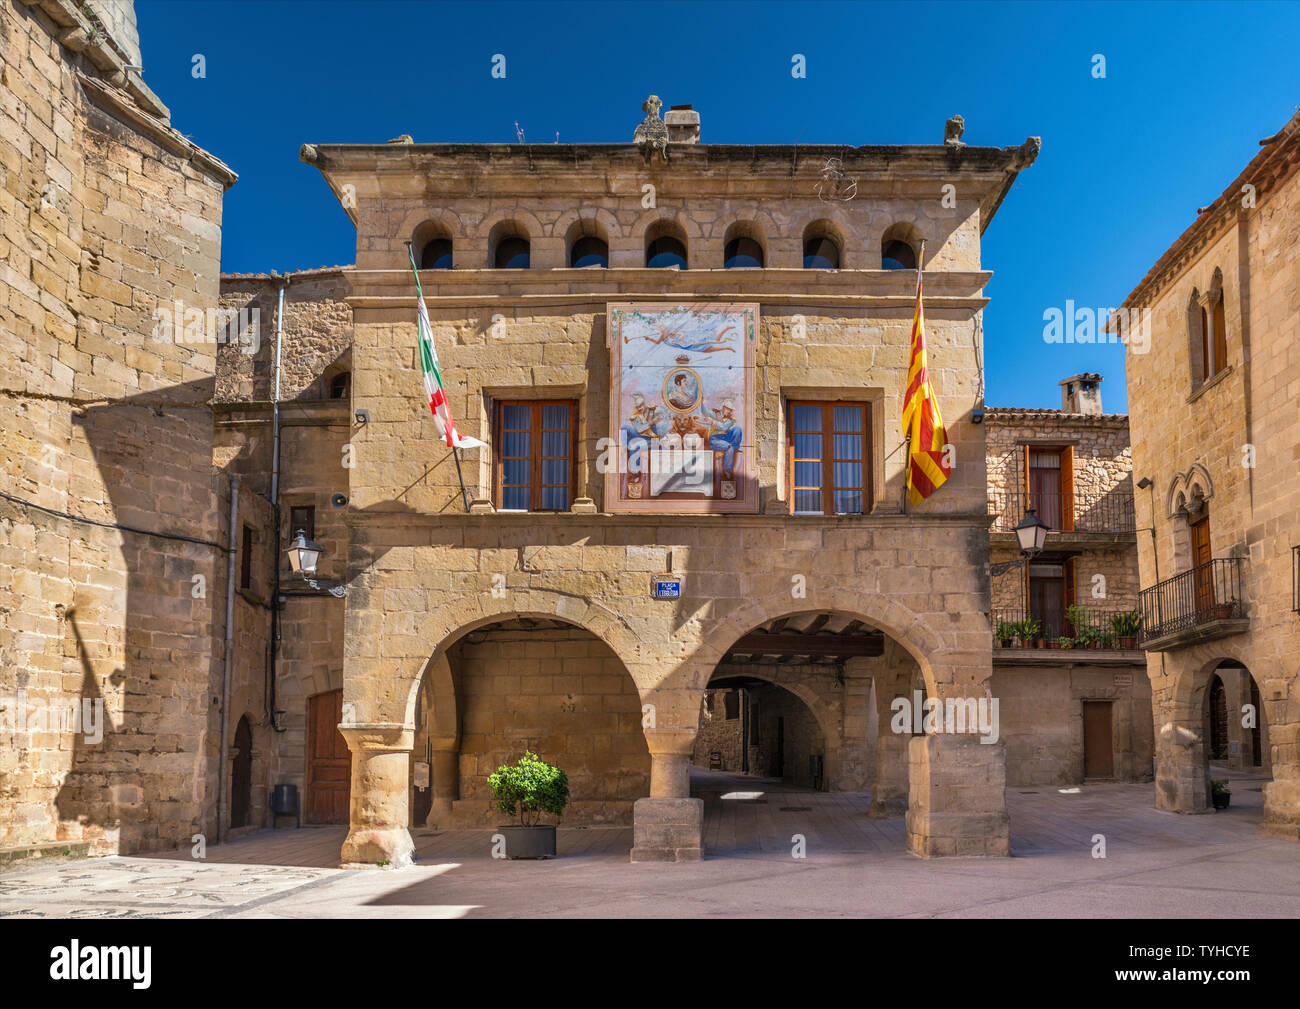 Ajuntament Horta de Sant Joan, town hall at Placa de l'Esglesia, hilltown of Horta de San Juan, Terra Alta (Castellania) wine region, Catalonia, Spain Stock Photo